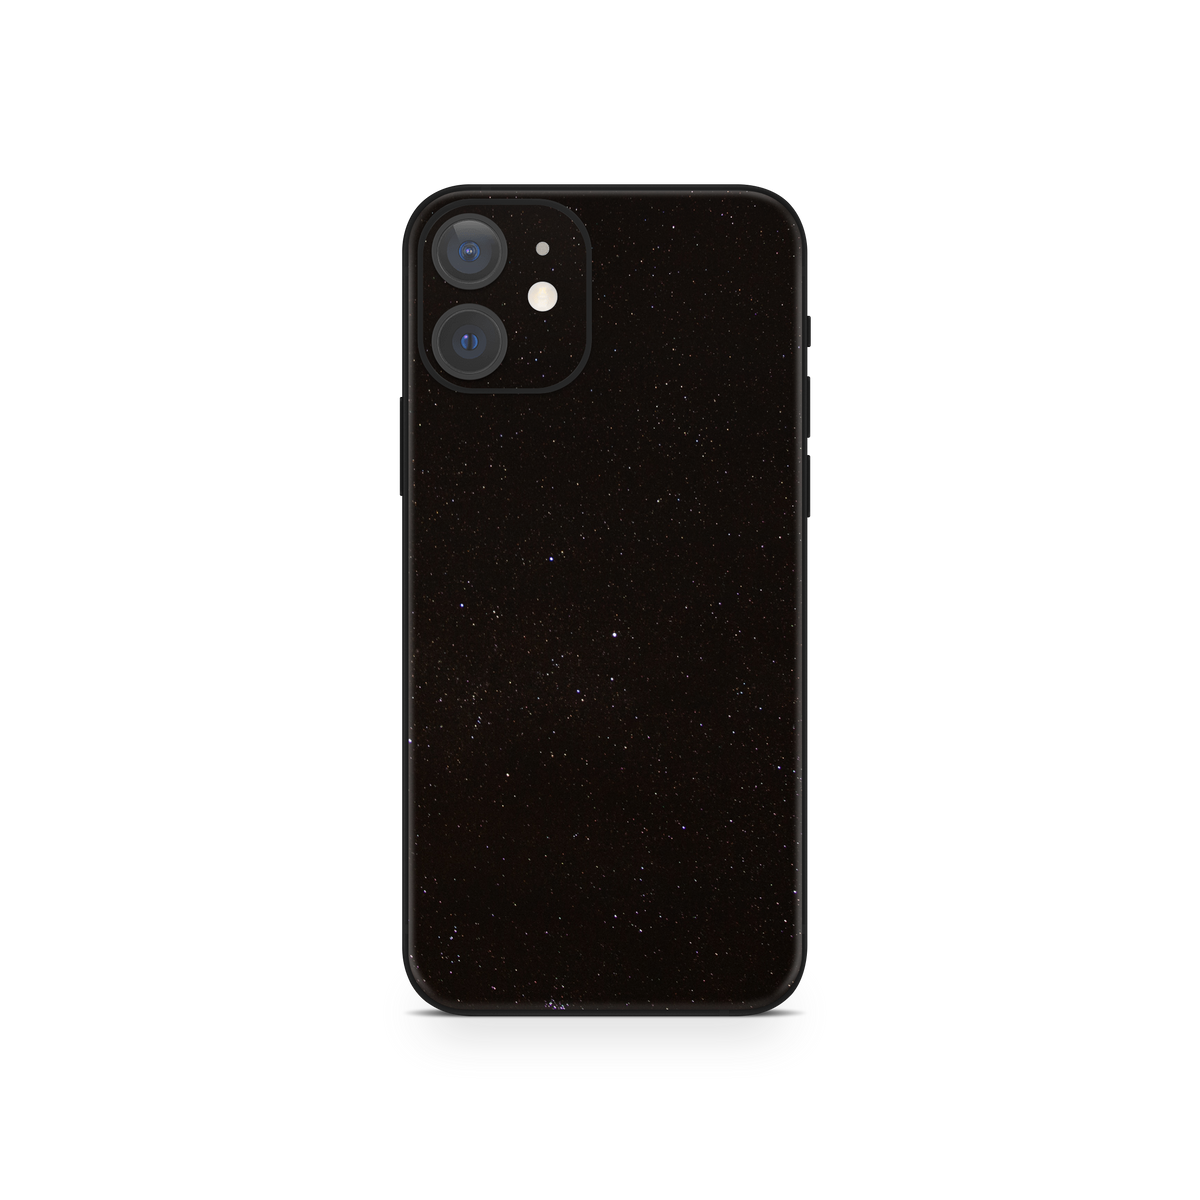 Apple iPhone 12 Deep Space Skin